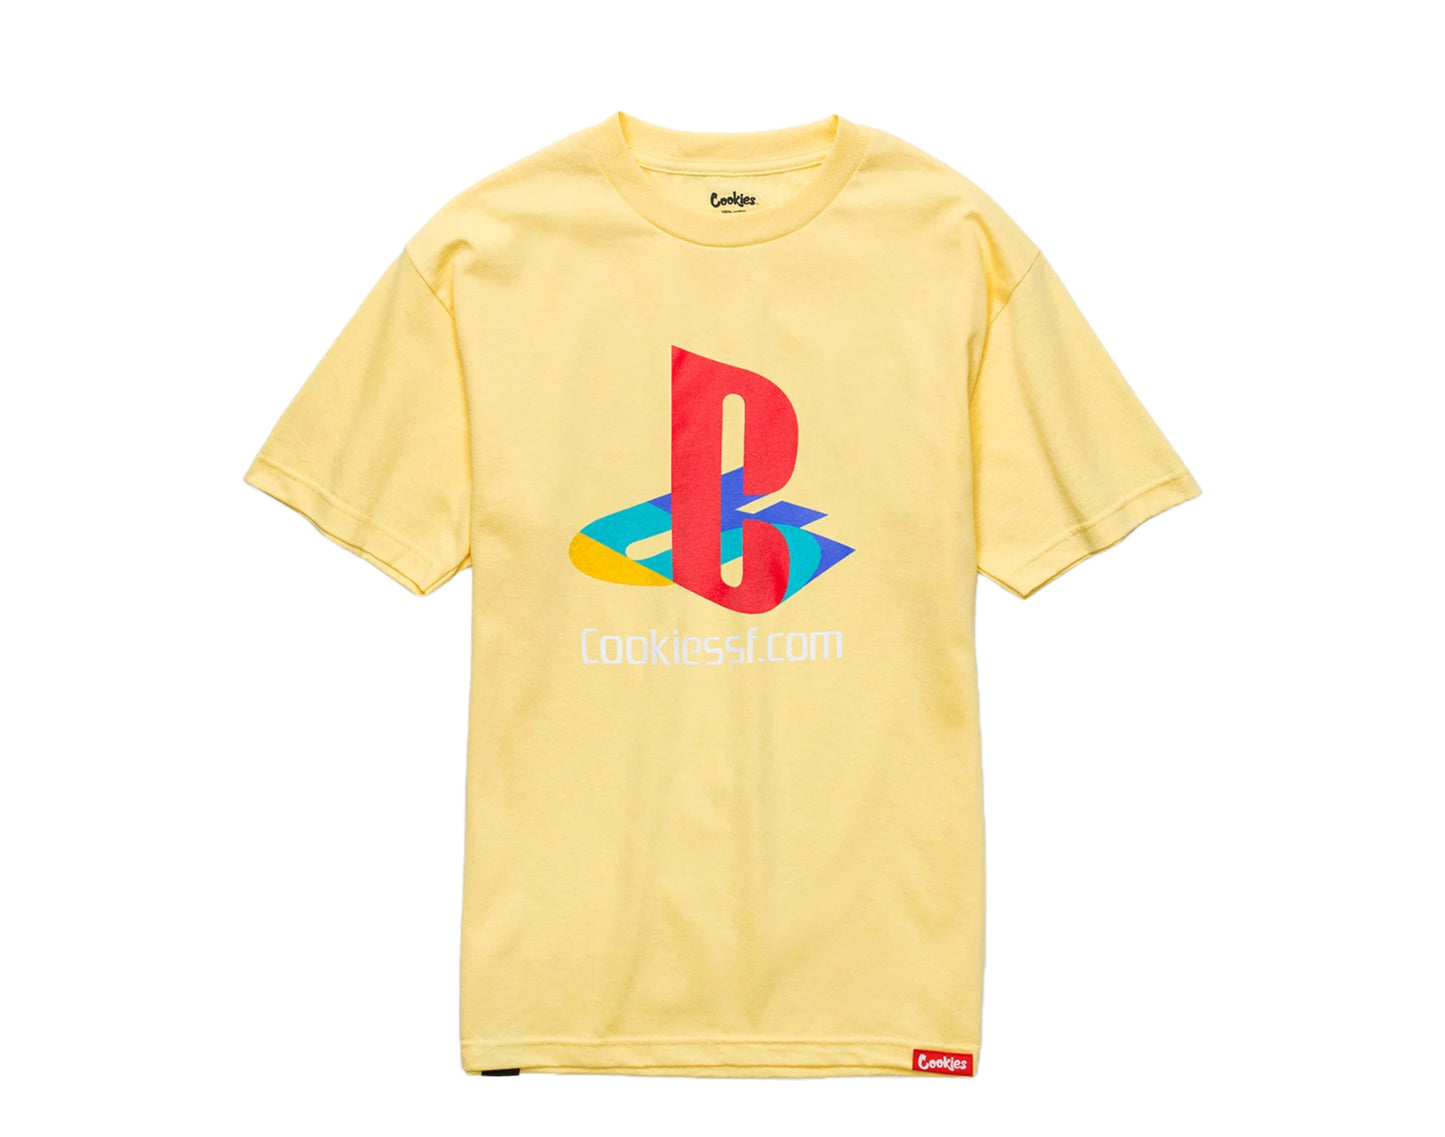 Cookies Gamer Banana Yellow PS5 Men's Tee Shirt 1546T4369-BAN